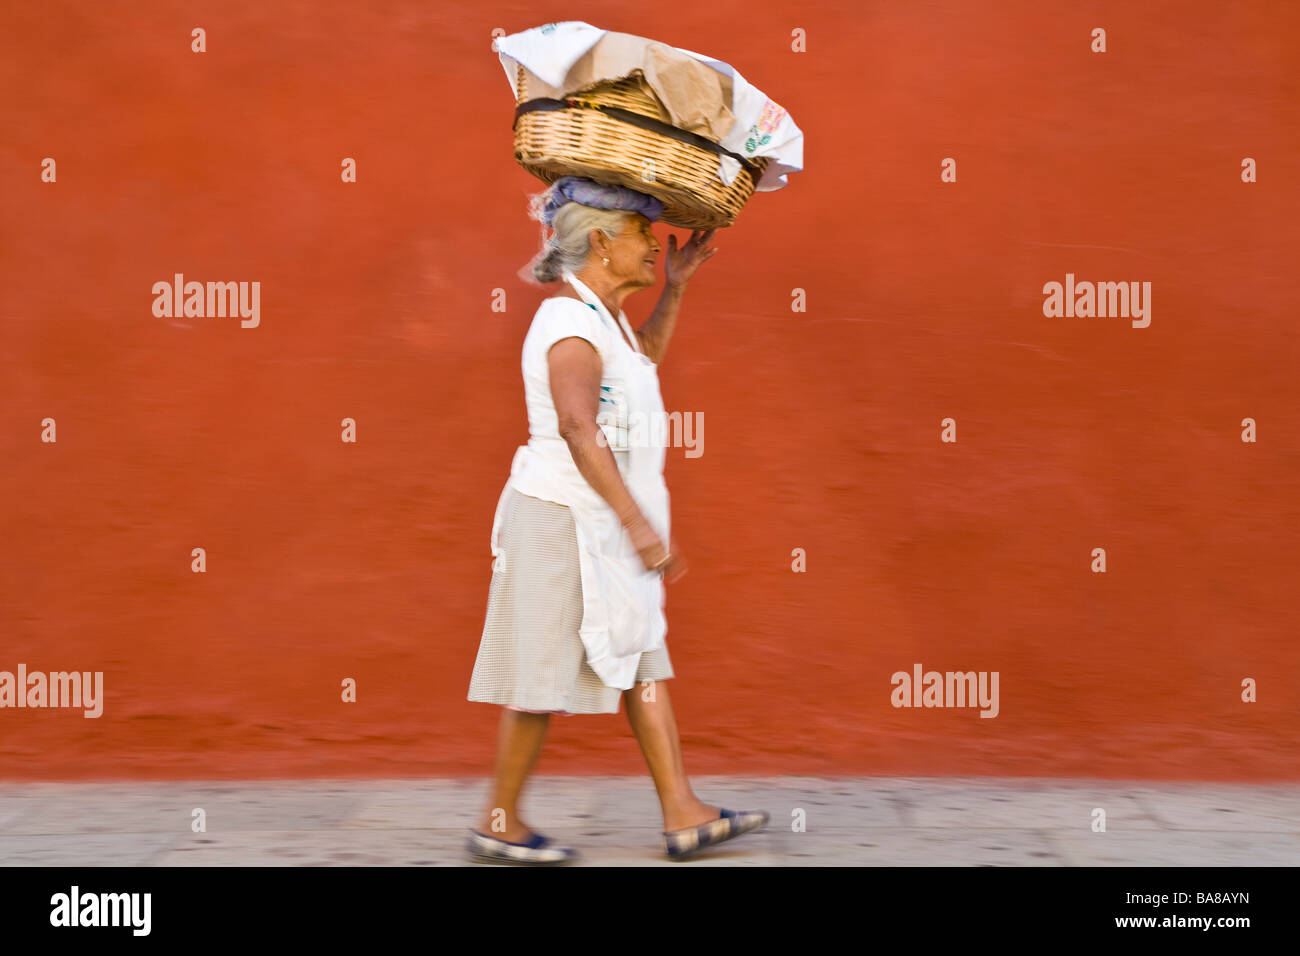 Street vendor with basket on head Stock Photo